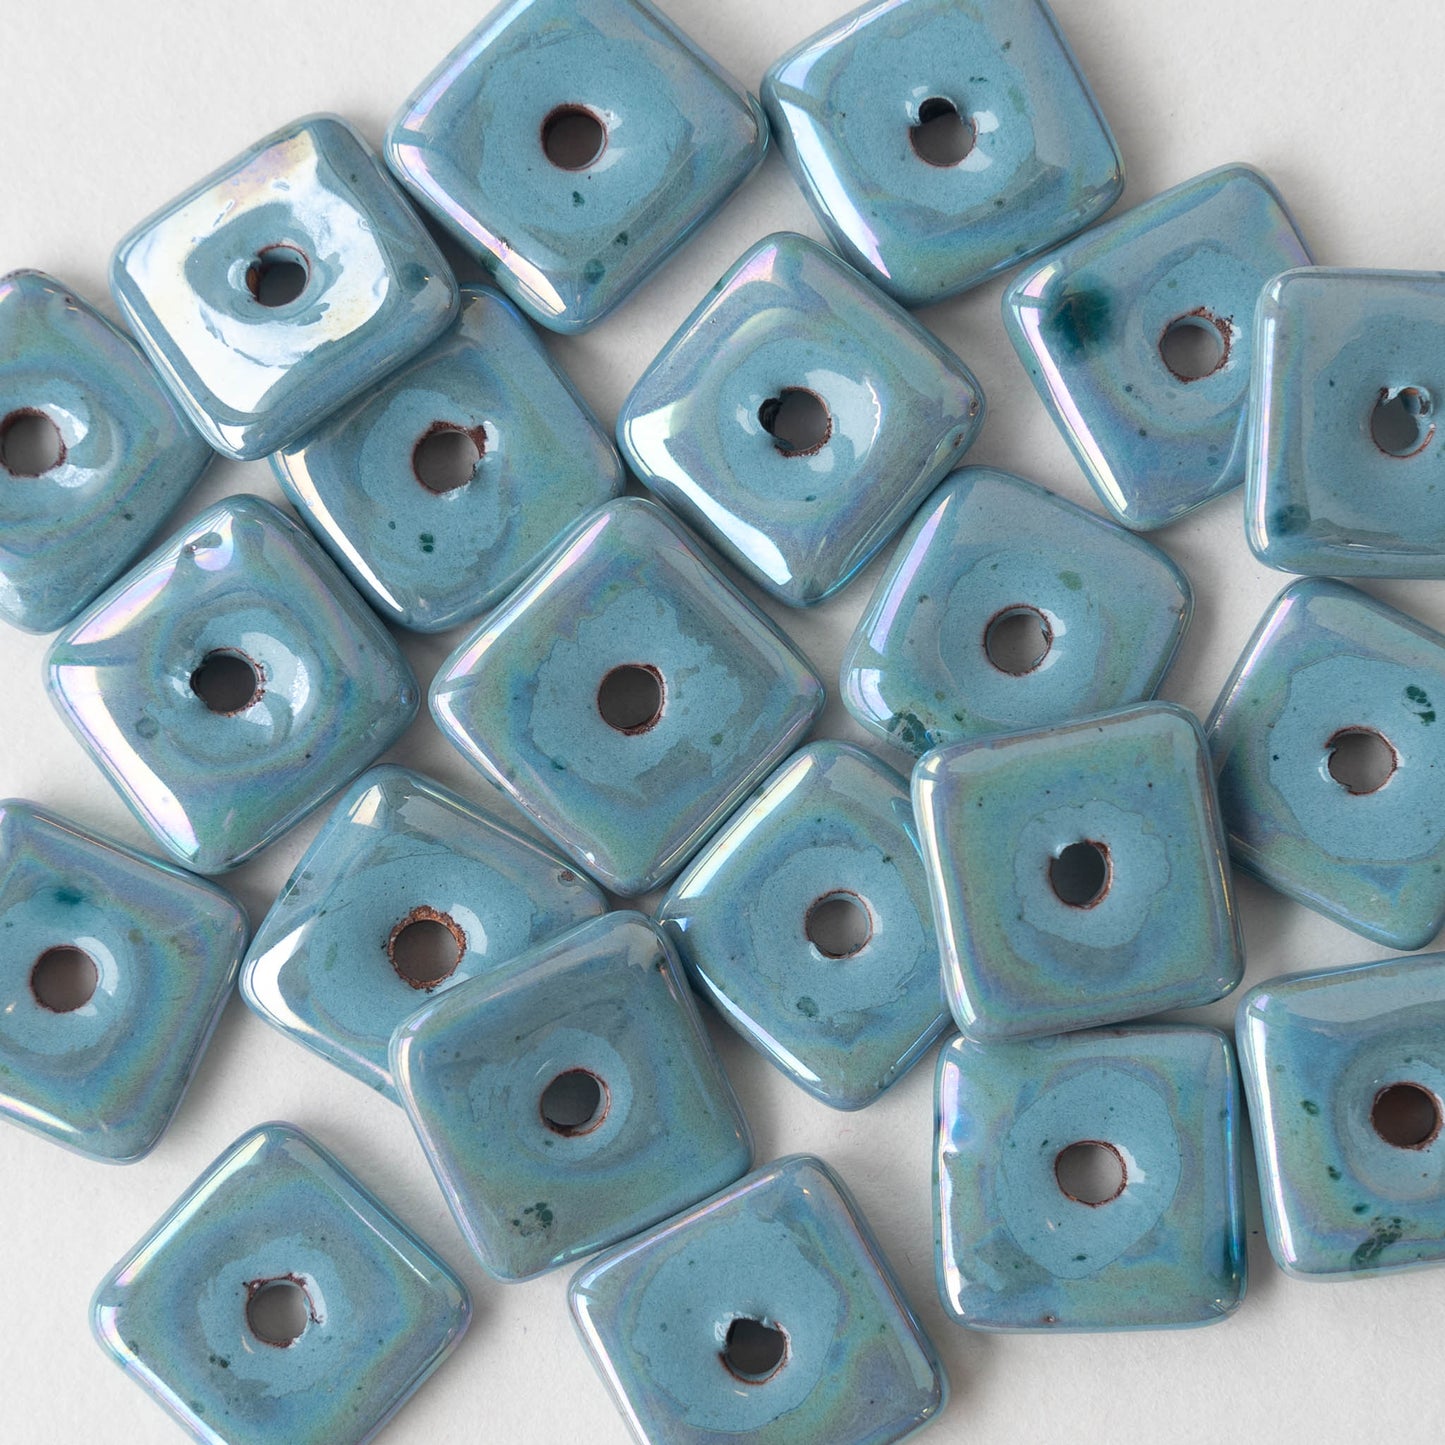 15-17mm Glazed Ceramic Square Tiles - Iridescent Light Blue - 10 or 30